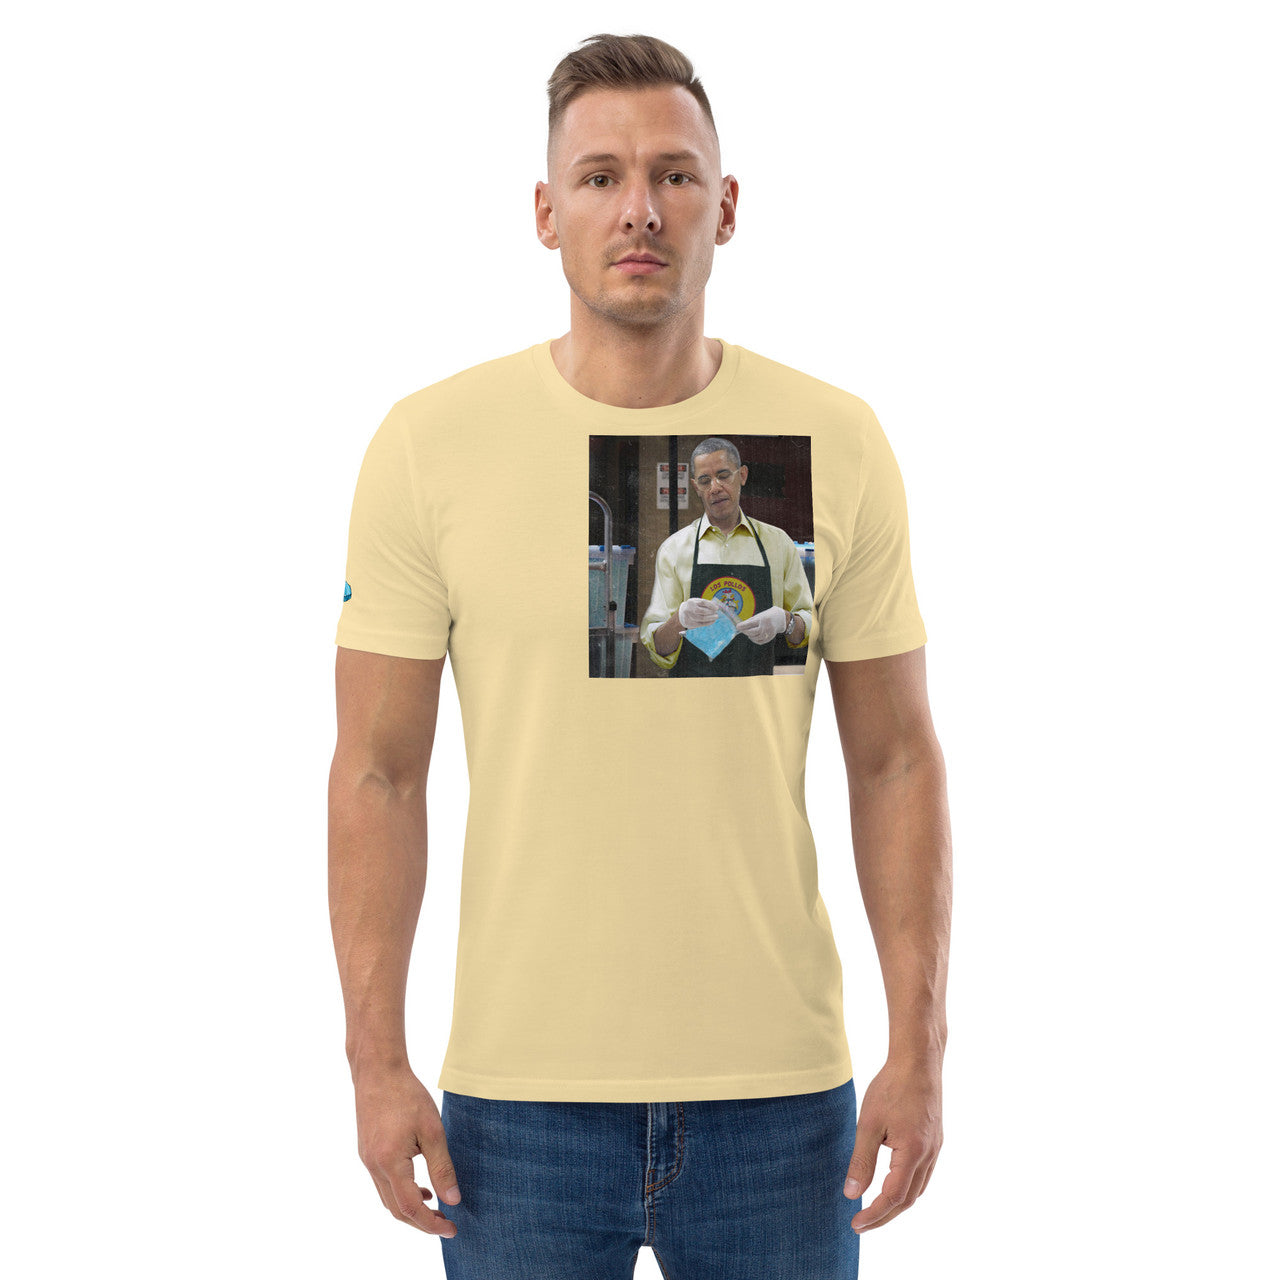 Baracking Bad KiSS Unisex organic cotton t-shirt - Obama Breaking Bad Gus Fring meth